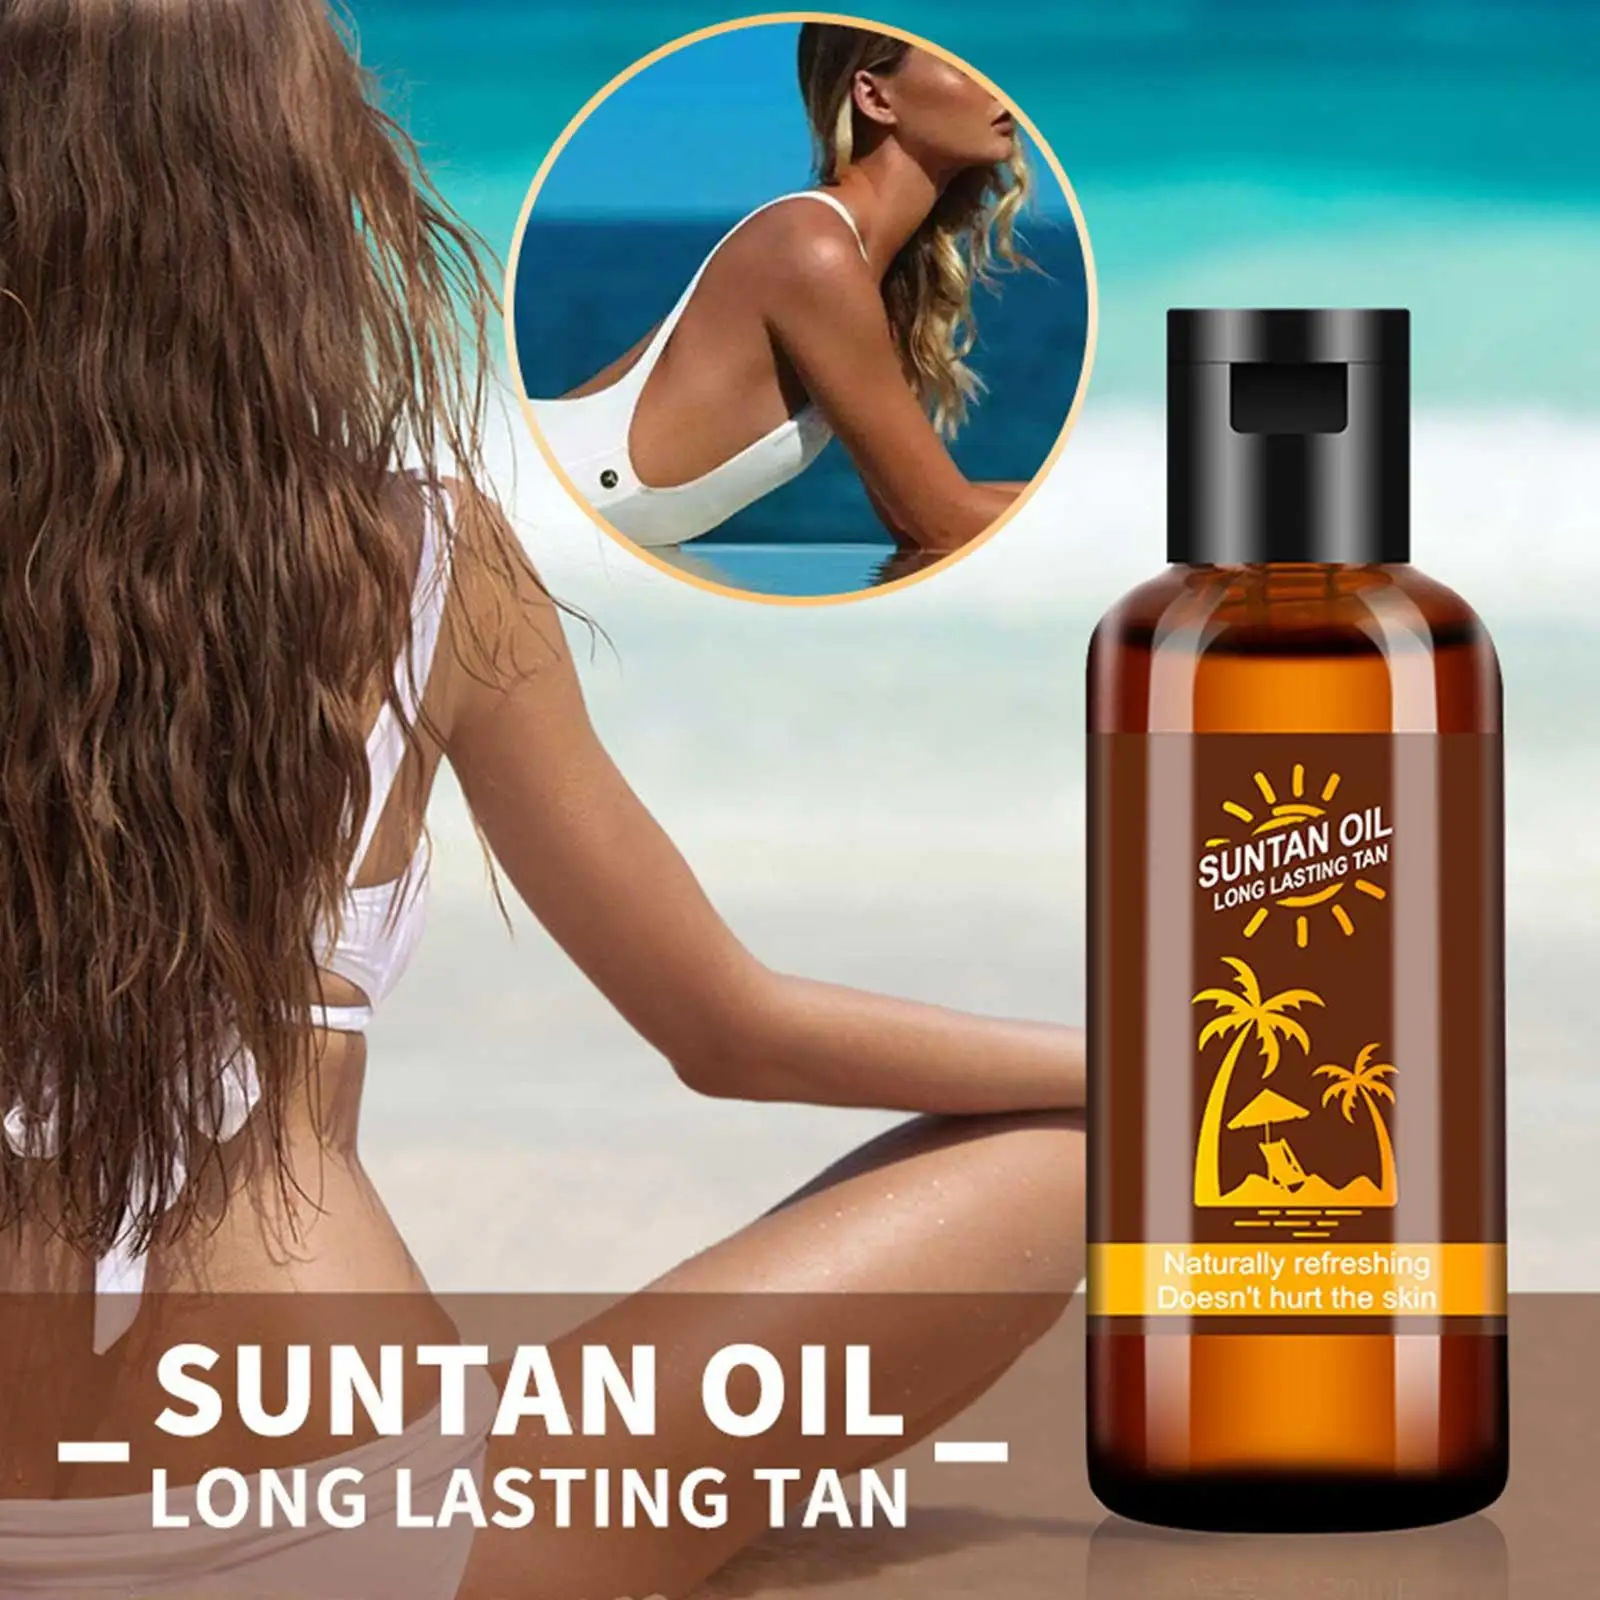 

Body Bronzer Self-tanning Oil Beach Sexy Solarium Suntan Natural Protection Lotion Shine Skin Lasting Tan Oils Long Protect E6X3